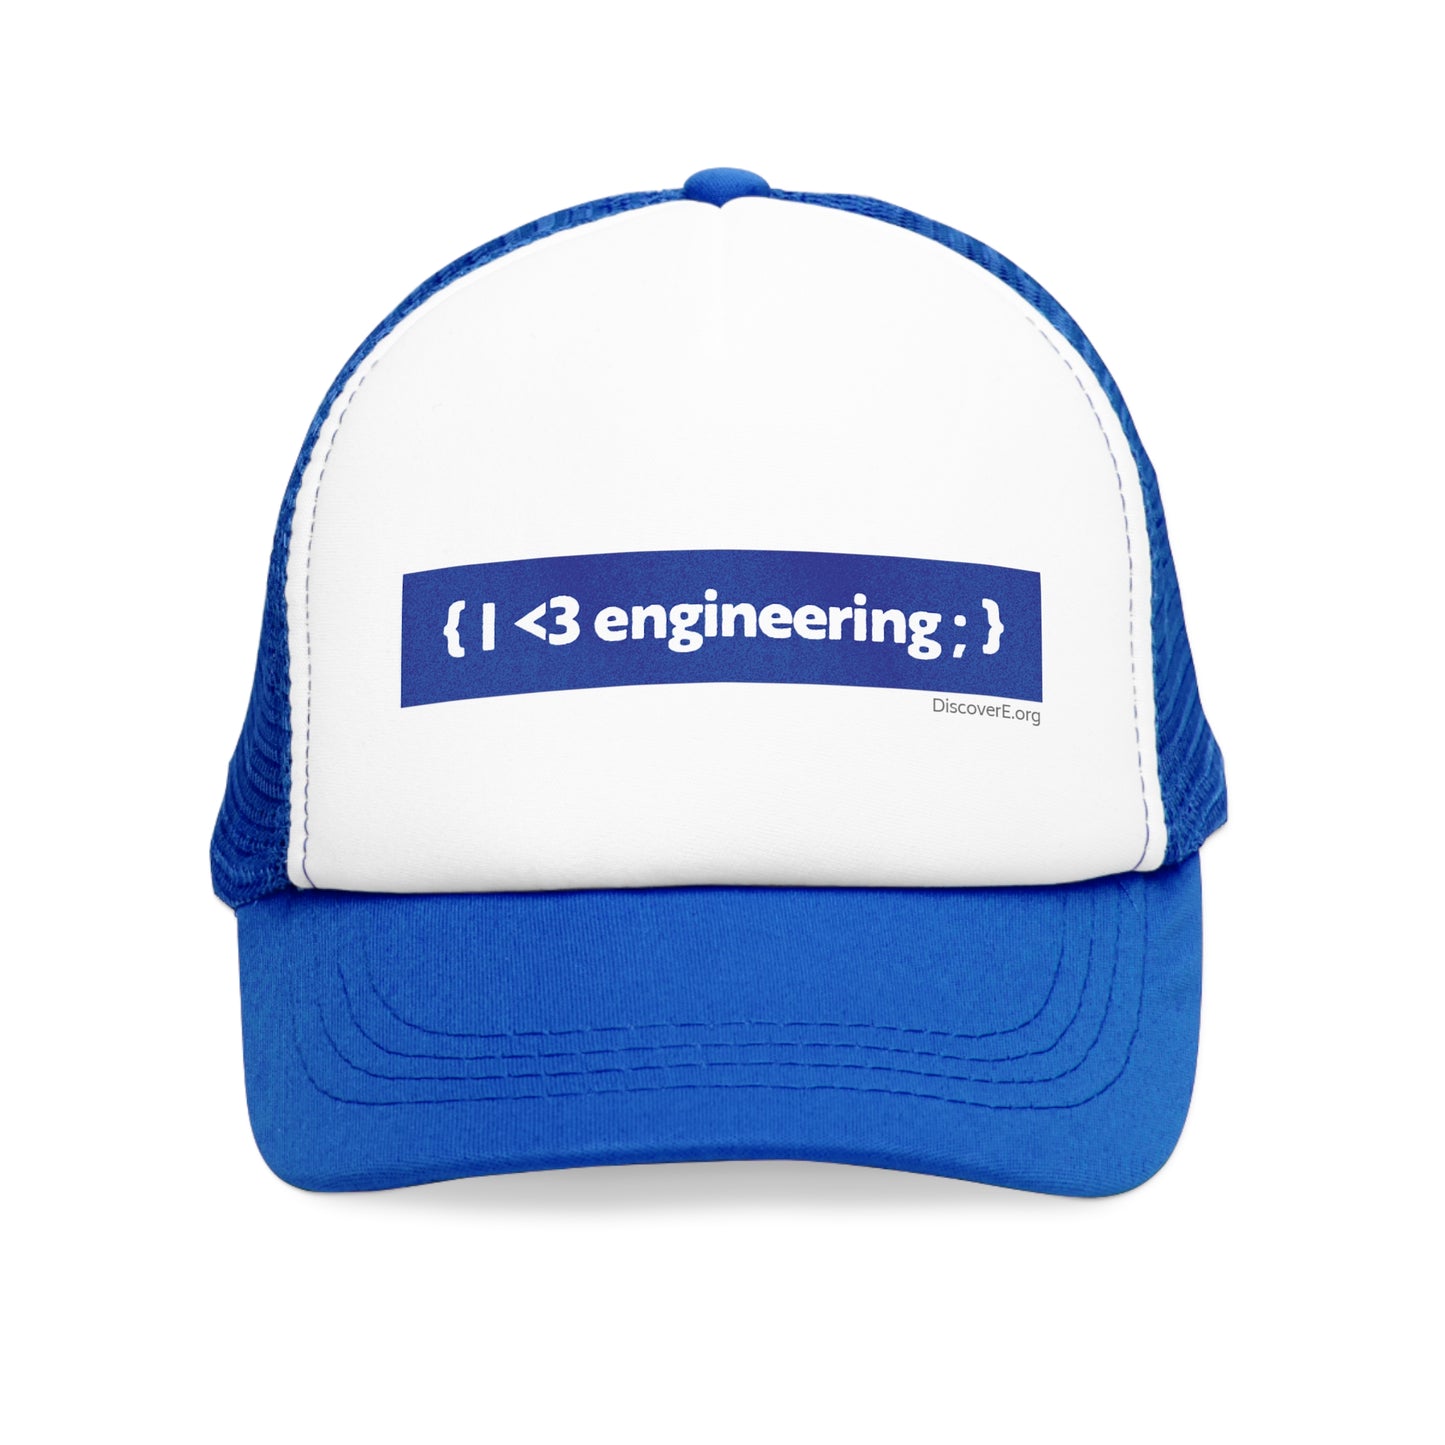 I <3 Engineering!